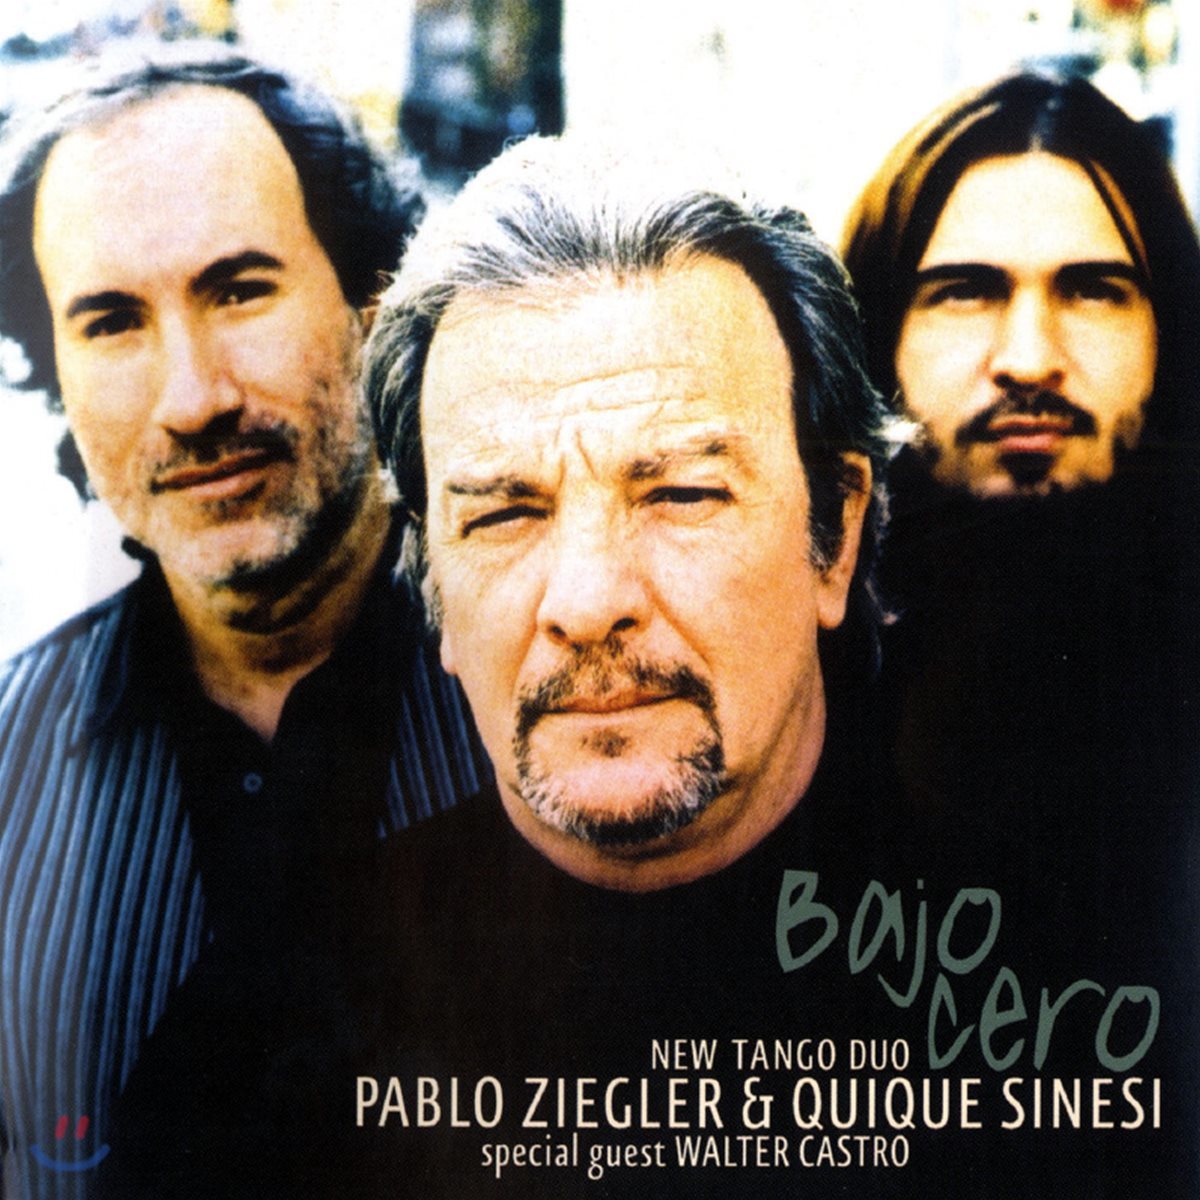 Pablo Ziegler / Quique Sinesi (파블로 지에글러 / 퀴큐에 시네시) - Bajo Cero [New Tango Duo] 